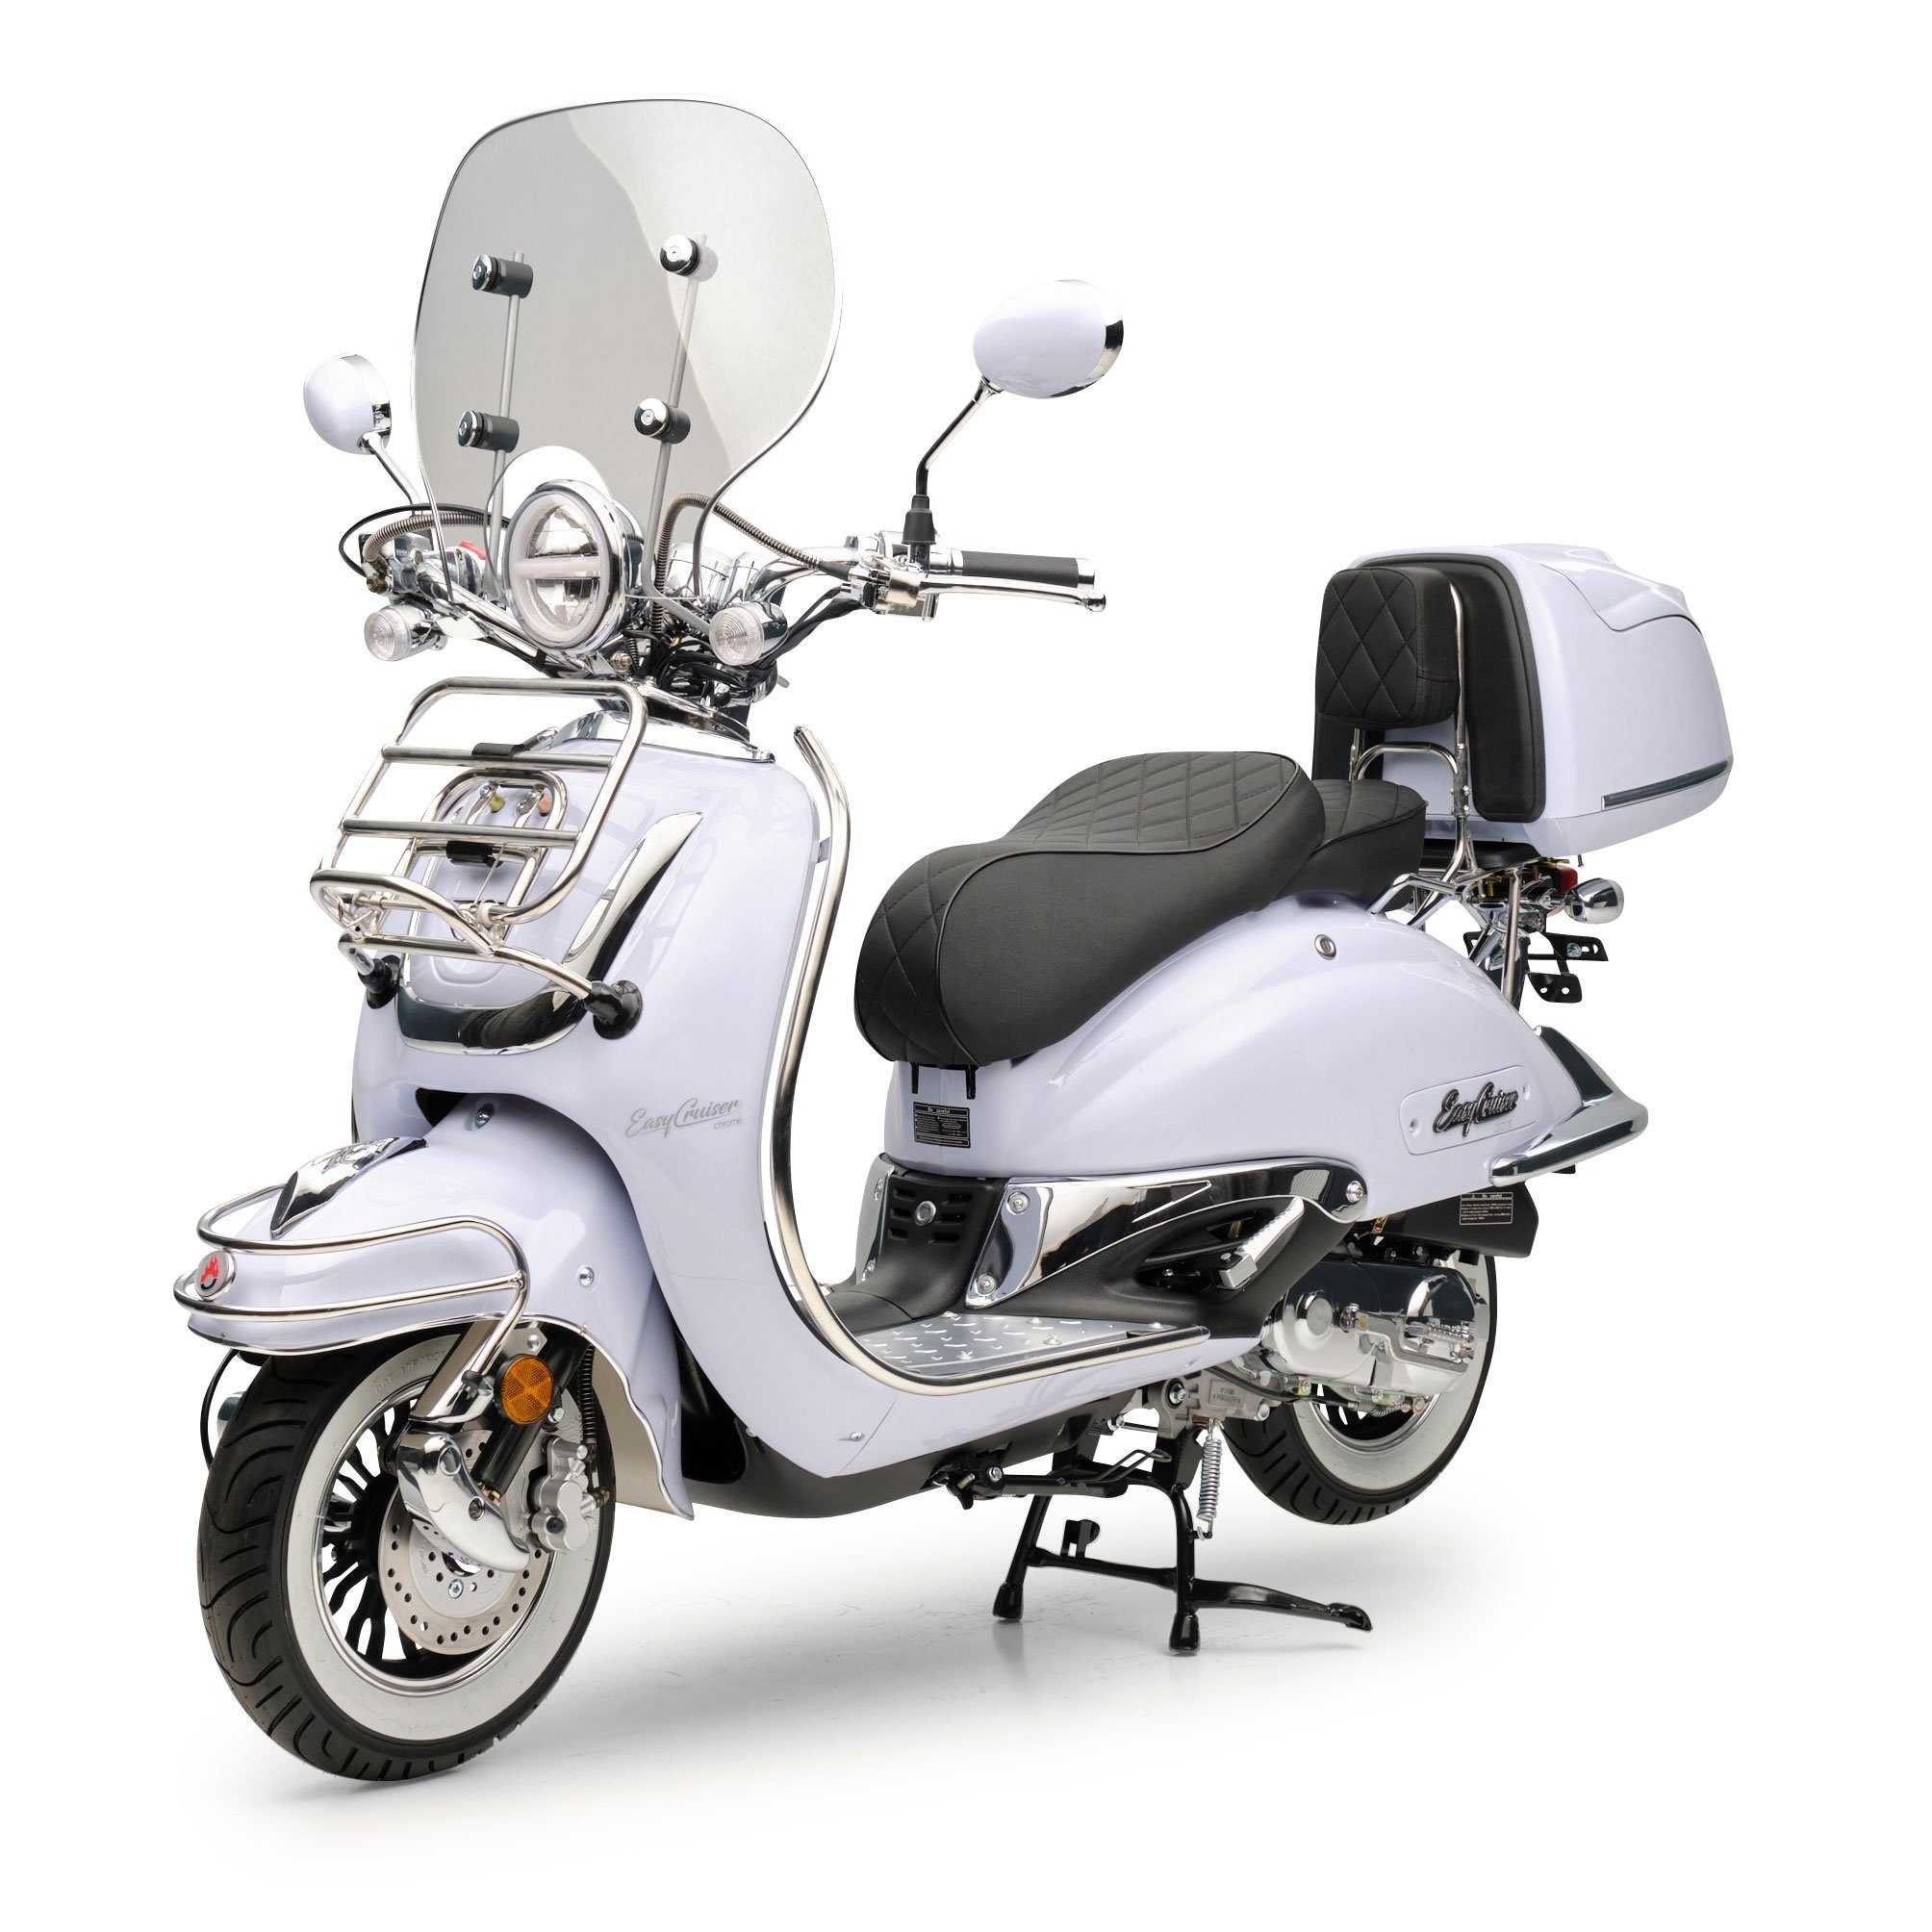 Burnout Motorroller EasyCruiser Chrom Eisblau, 50 ccm, 45 km/h, Euro 5, LED Beleuchtung, Digitales Tacho, Retro, mit Windschild & Topcase, USB